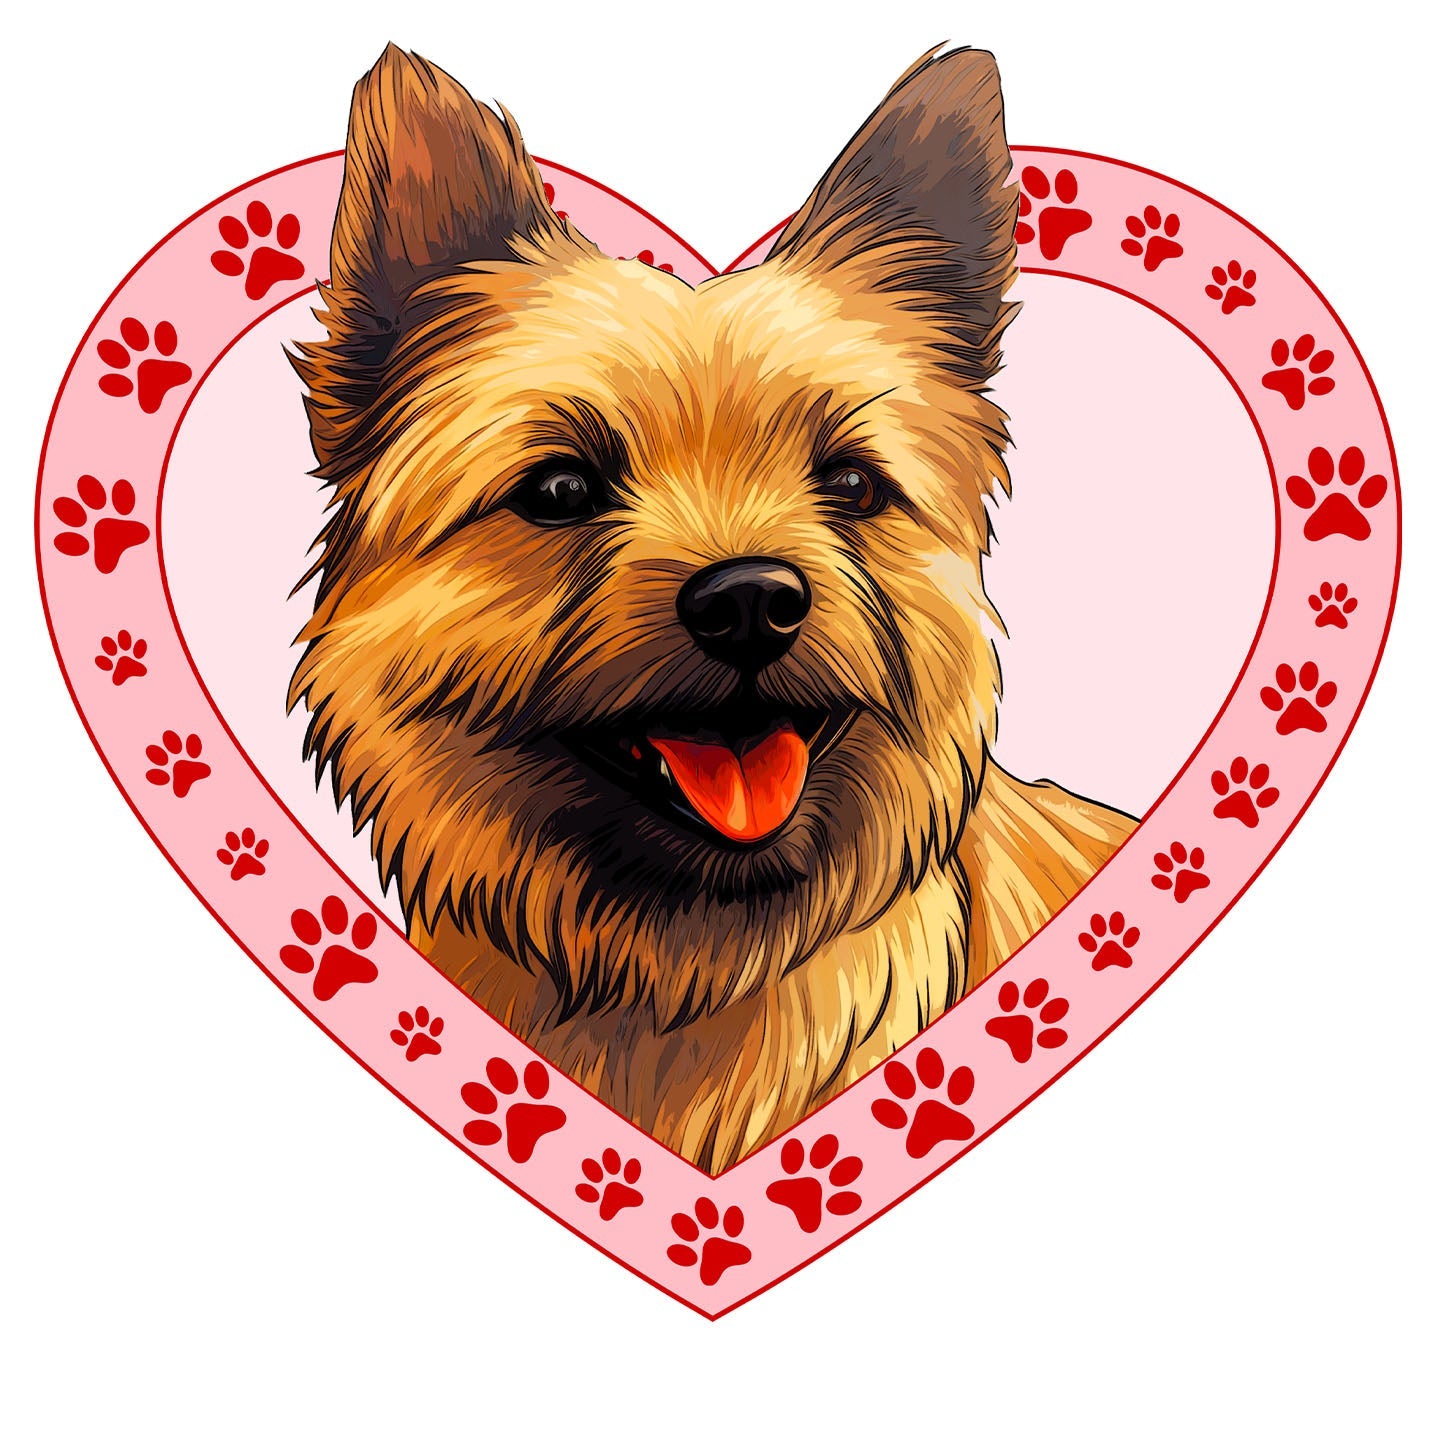 Norwich Terrier Illustration In Heart - Adult Unisex T-Shirt